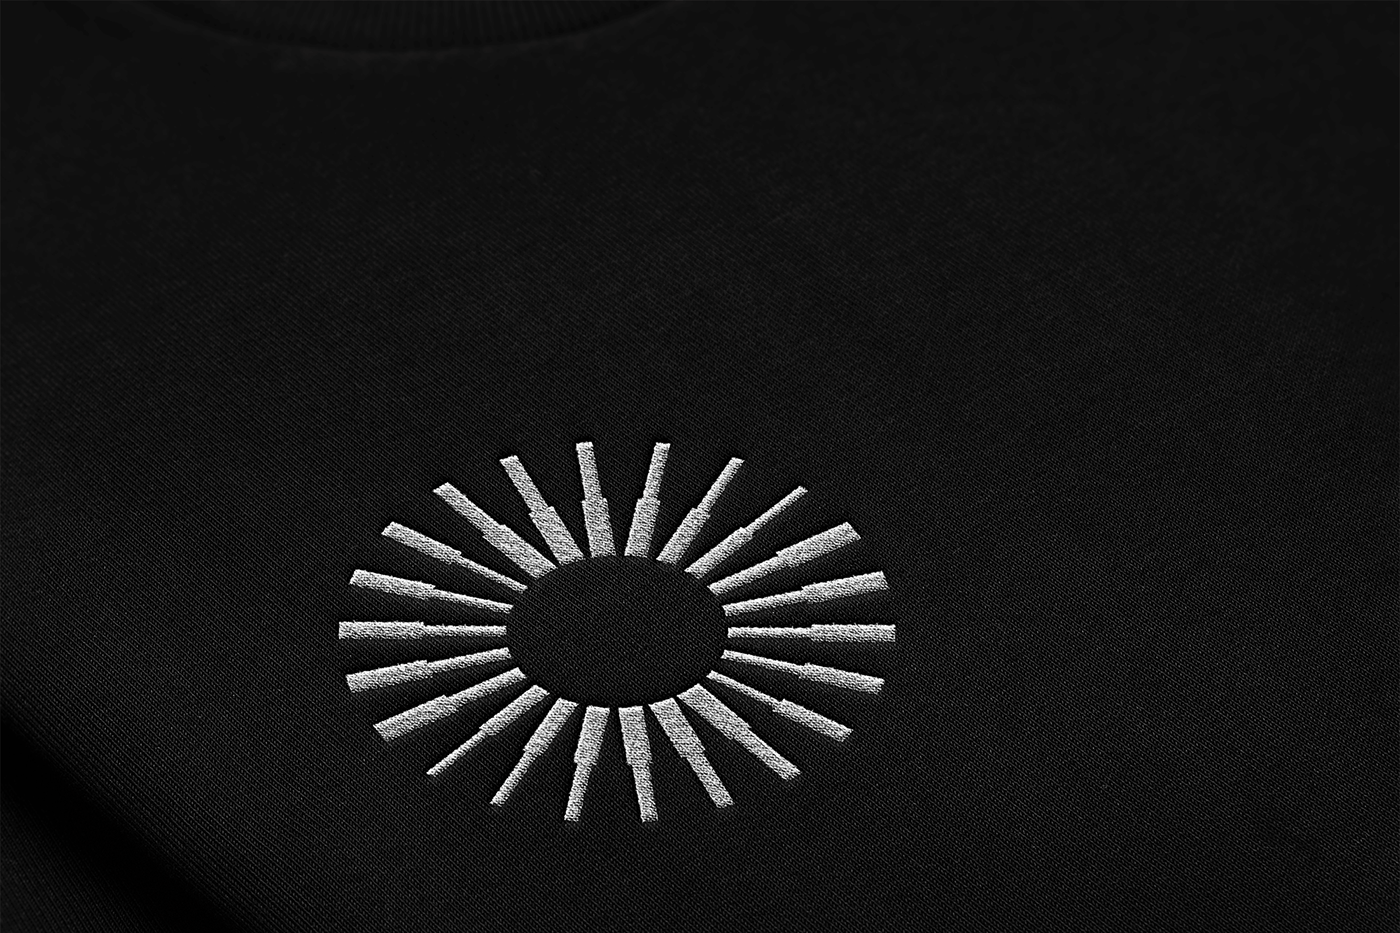 symbol geometry mechanical circle eye Sun machine logo